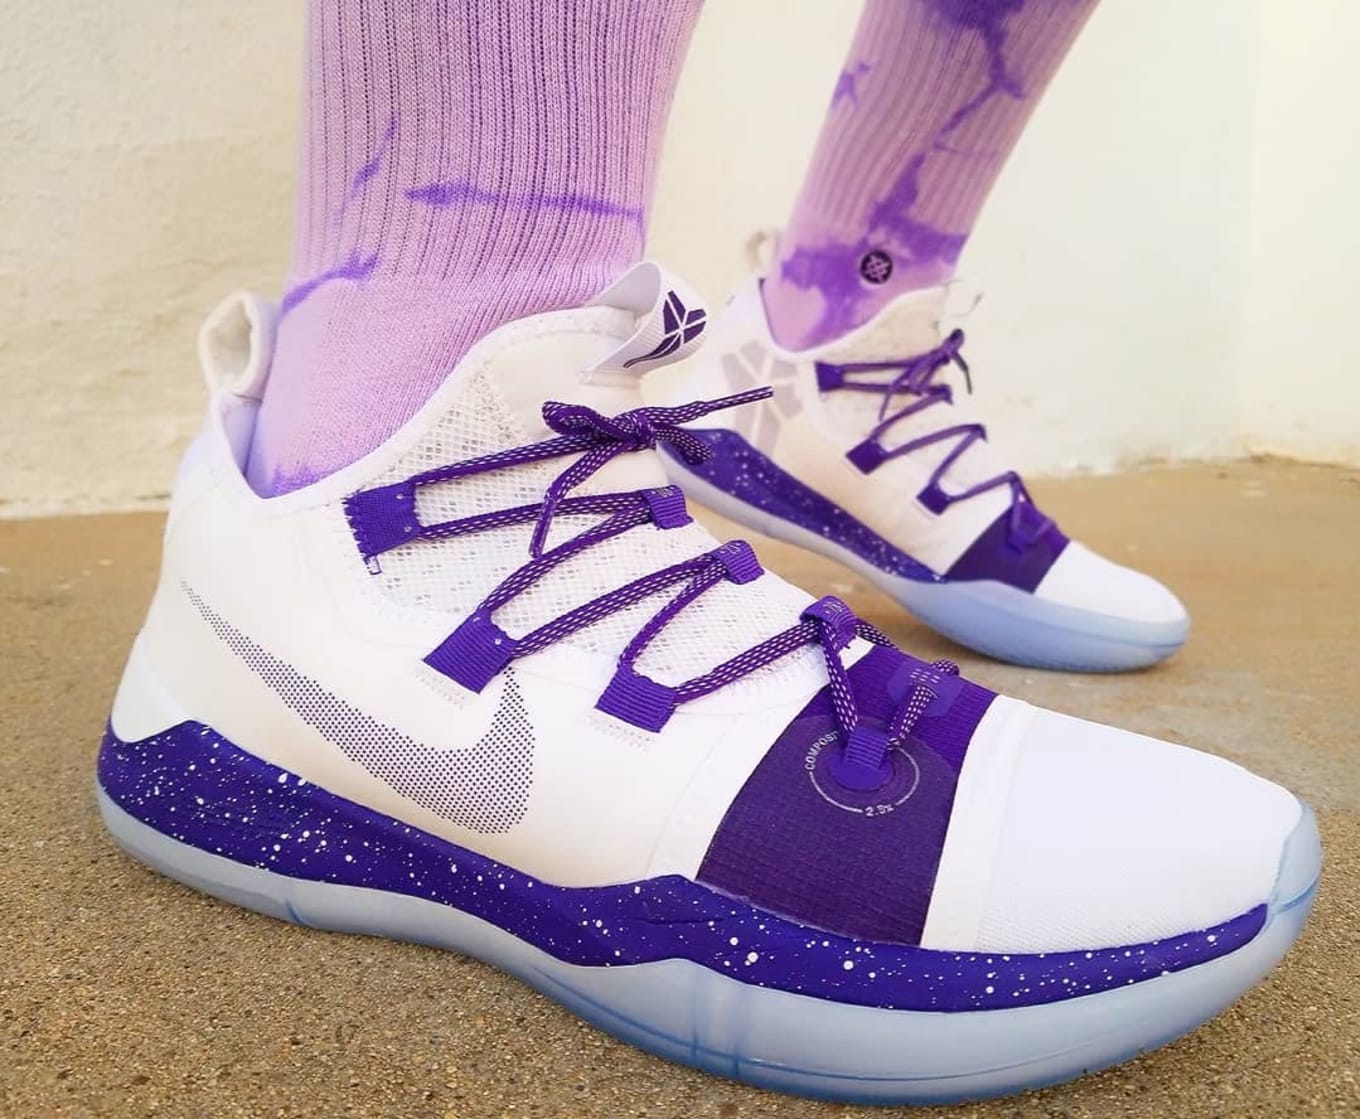 kobe shoes purple and white